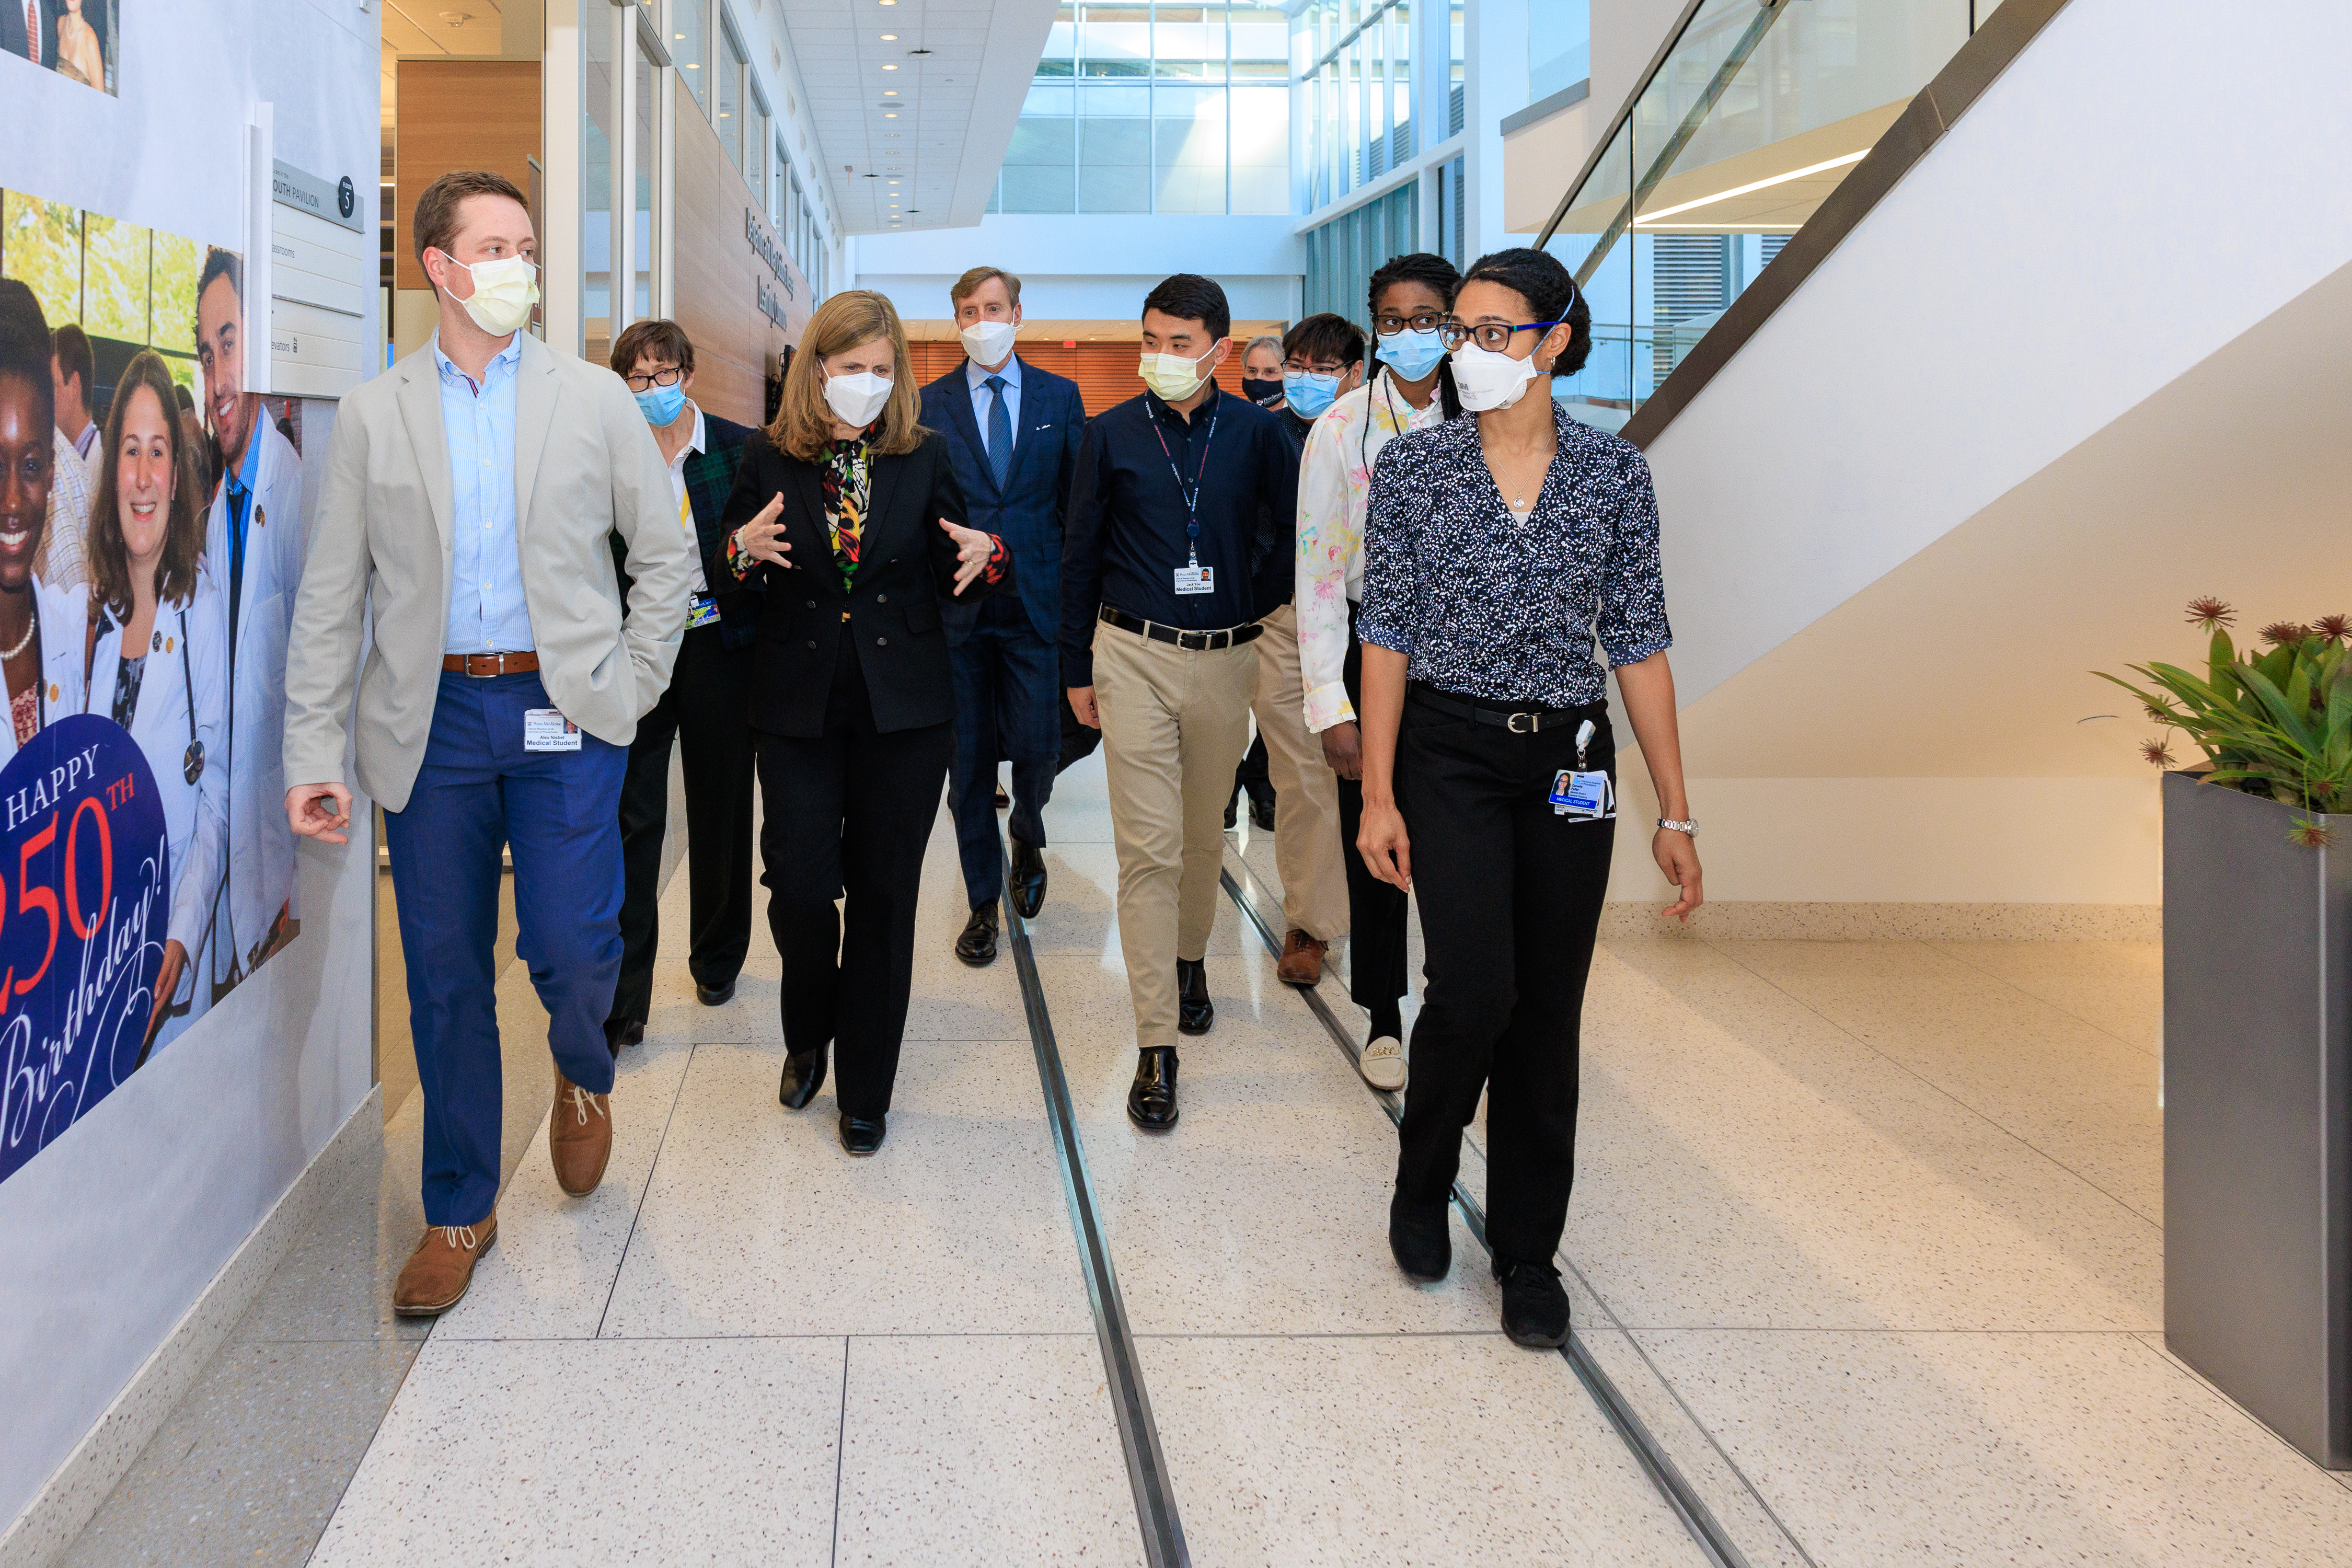 Liz Magill walks through a hallway at Penn Medicine with others.